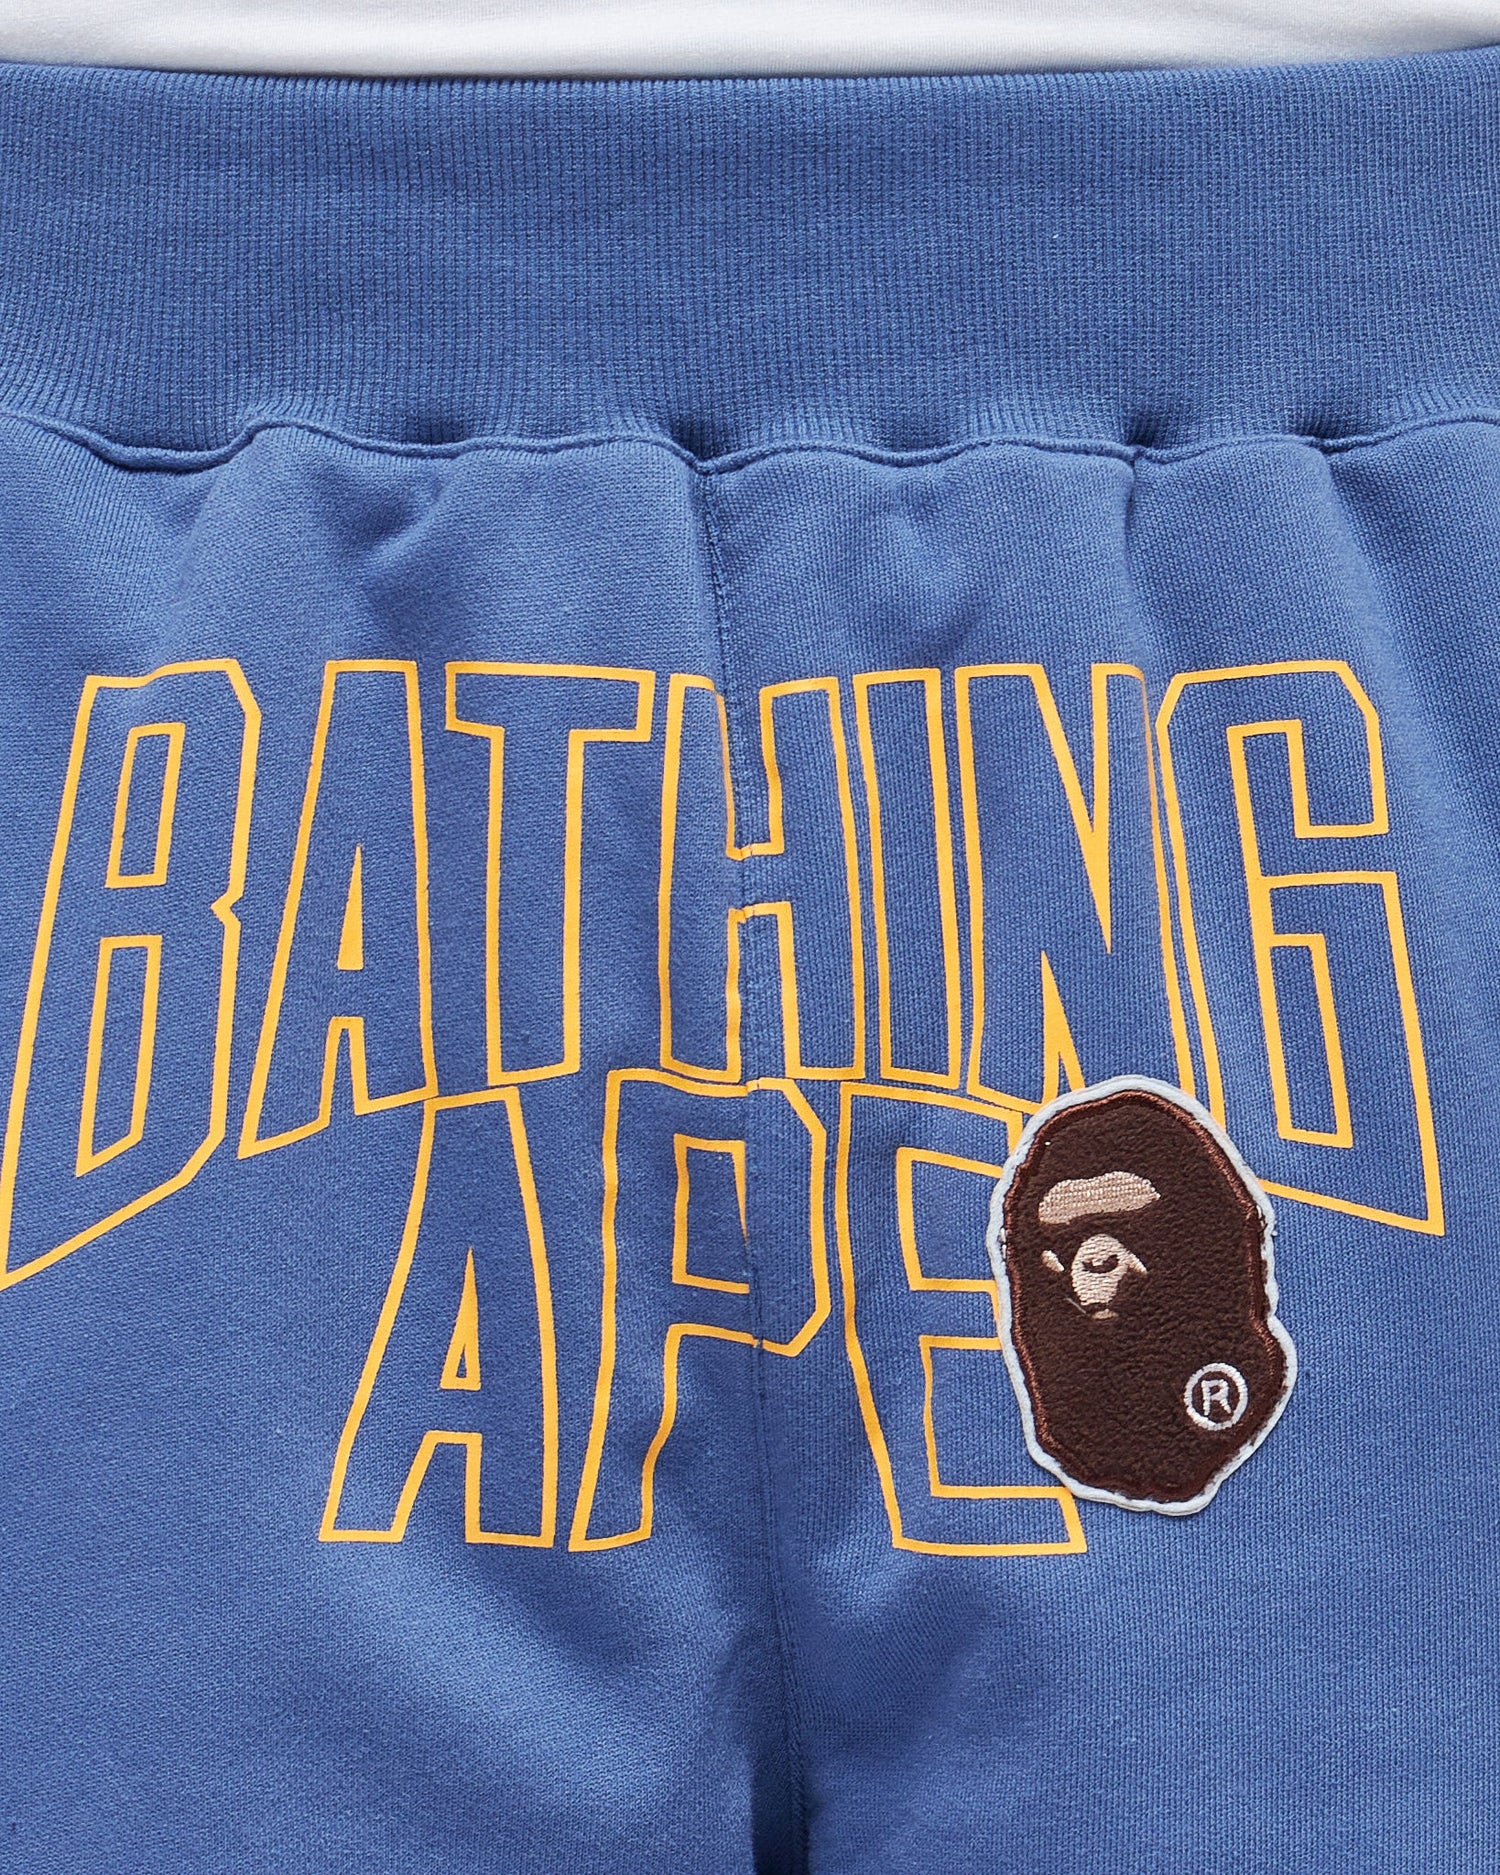 MOI OUTFIT-Bathing Ape Printed Men Shorts 25.90